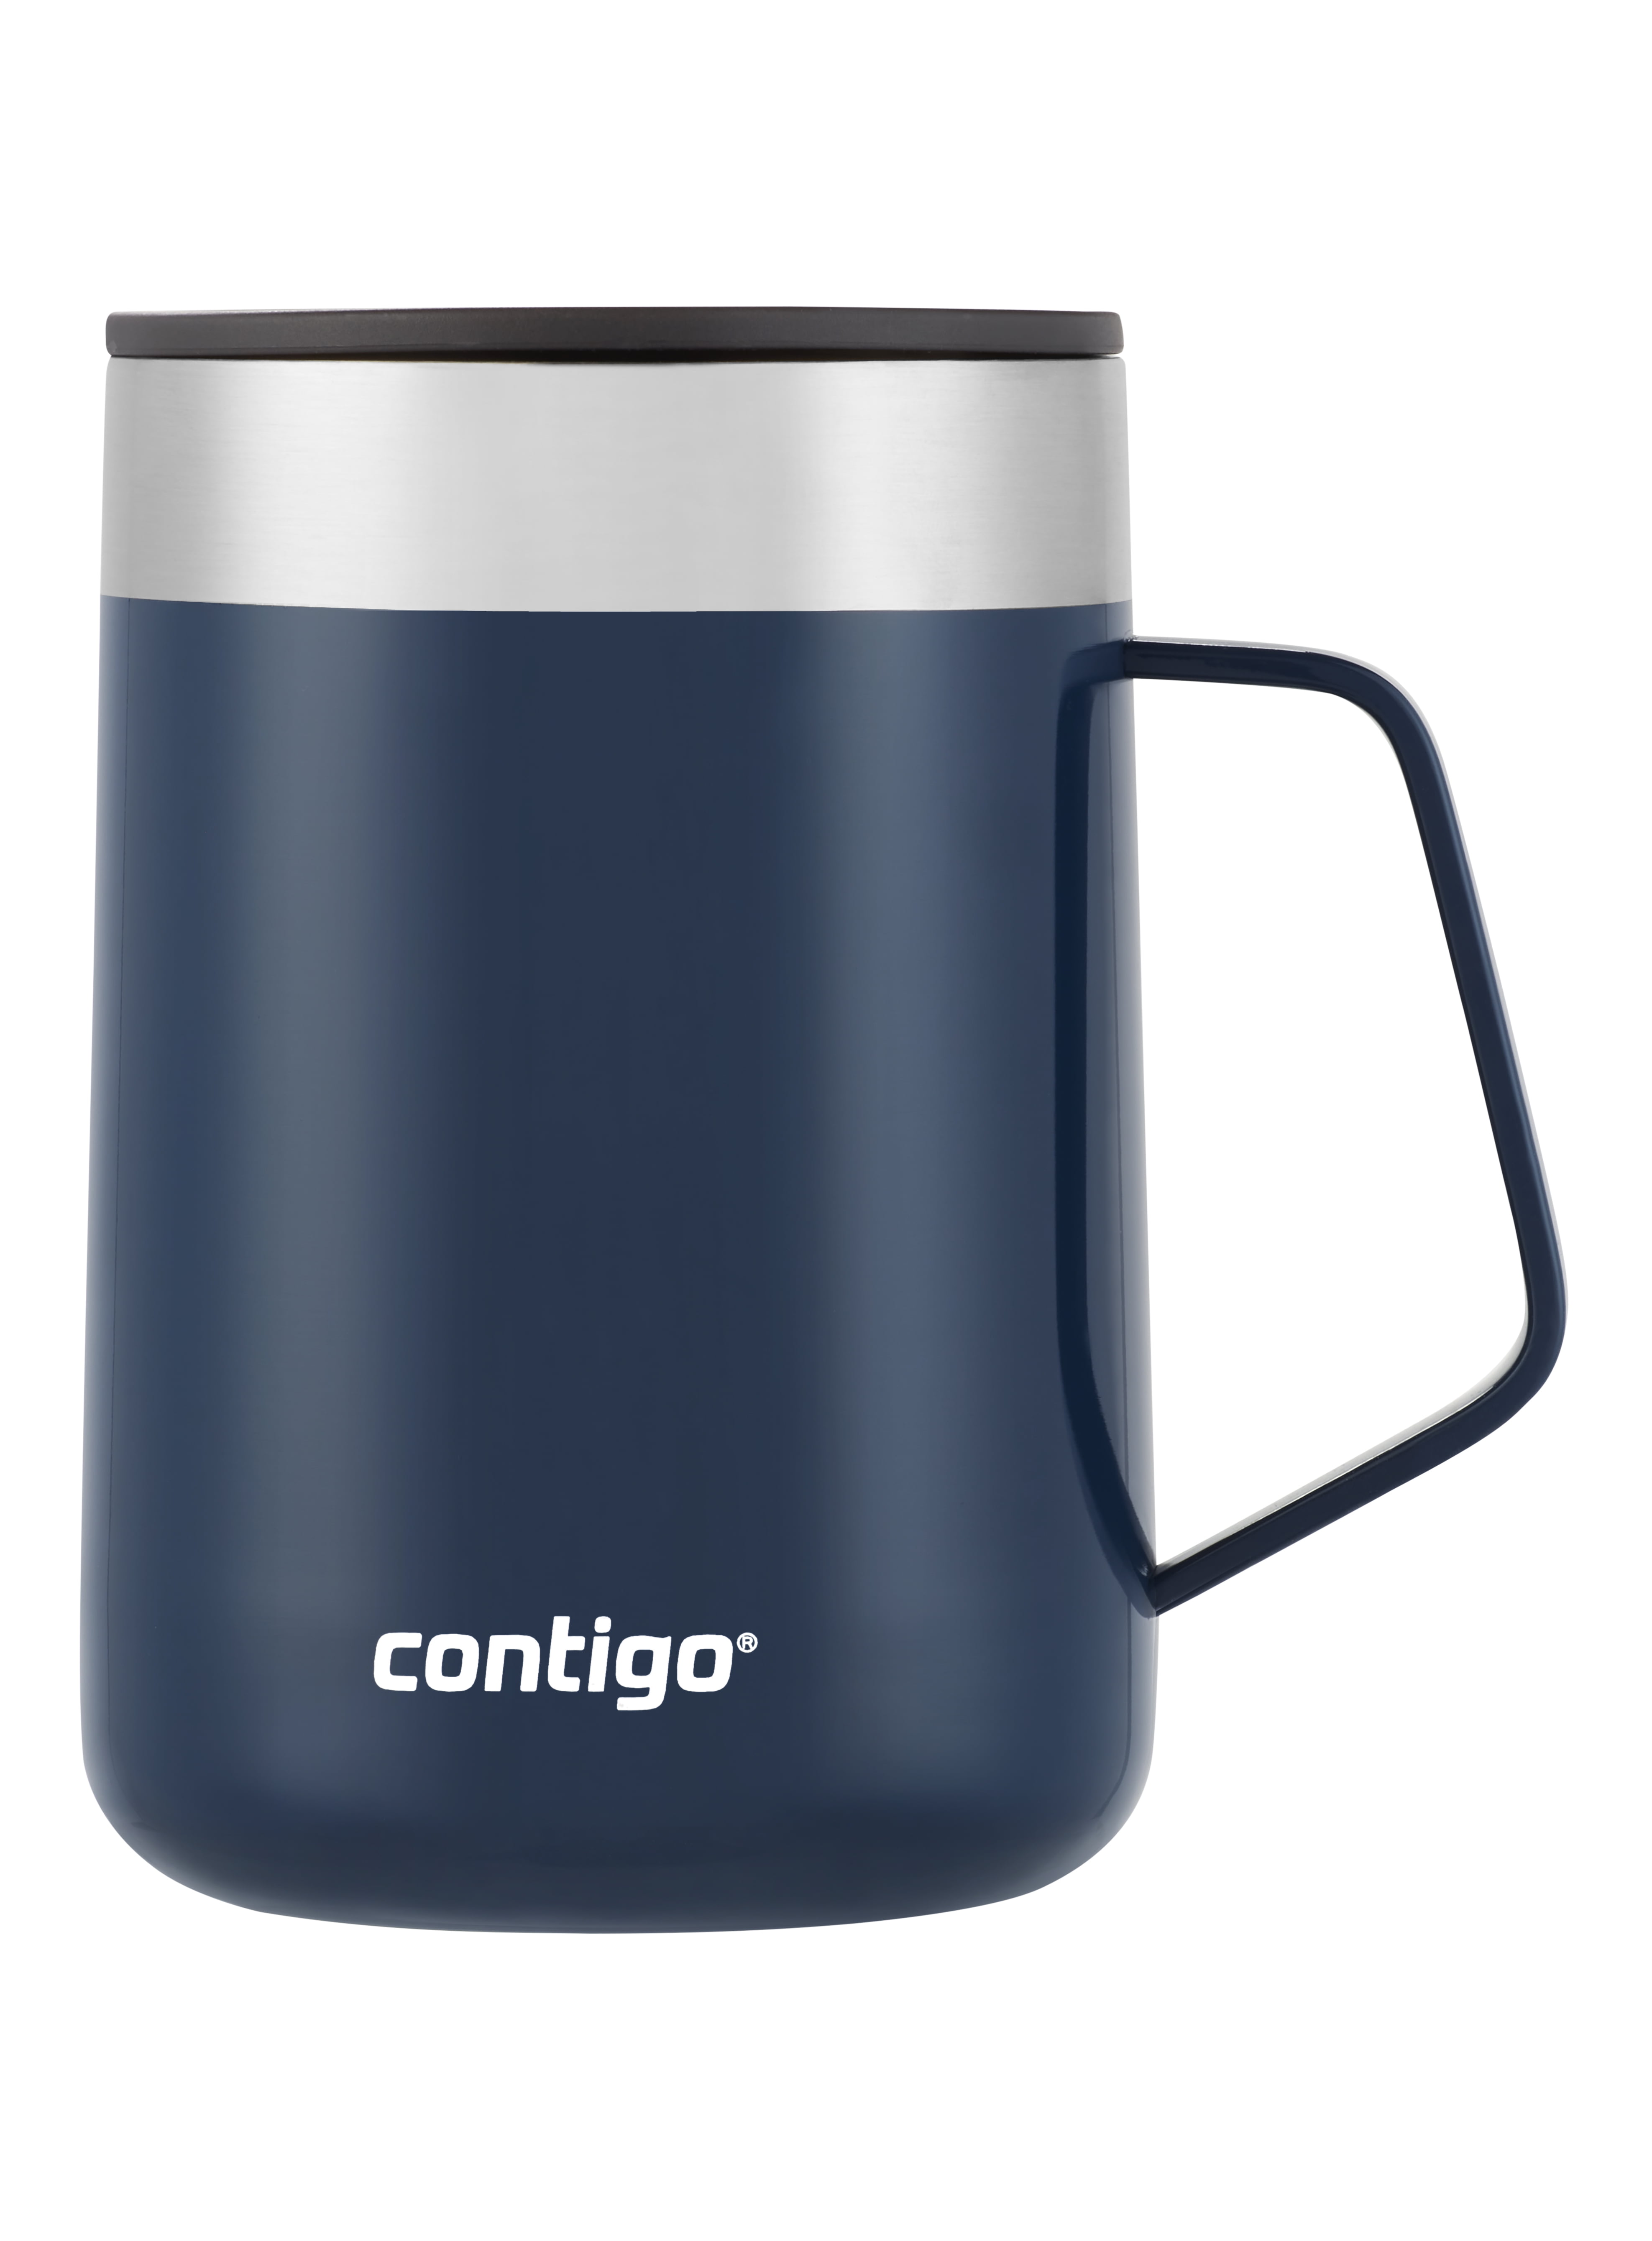 Contigo Streeterville Stainless Steel Mug with Splash-Proof Lid and Handle  Licorice Black, 14 fl oz.